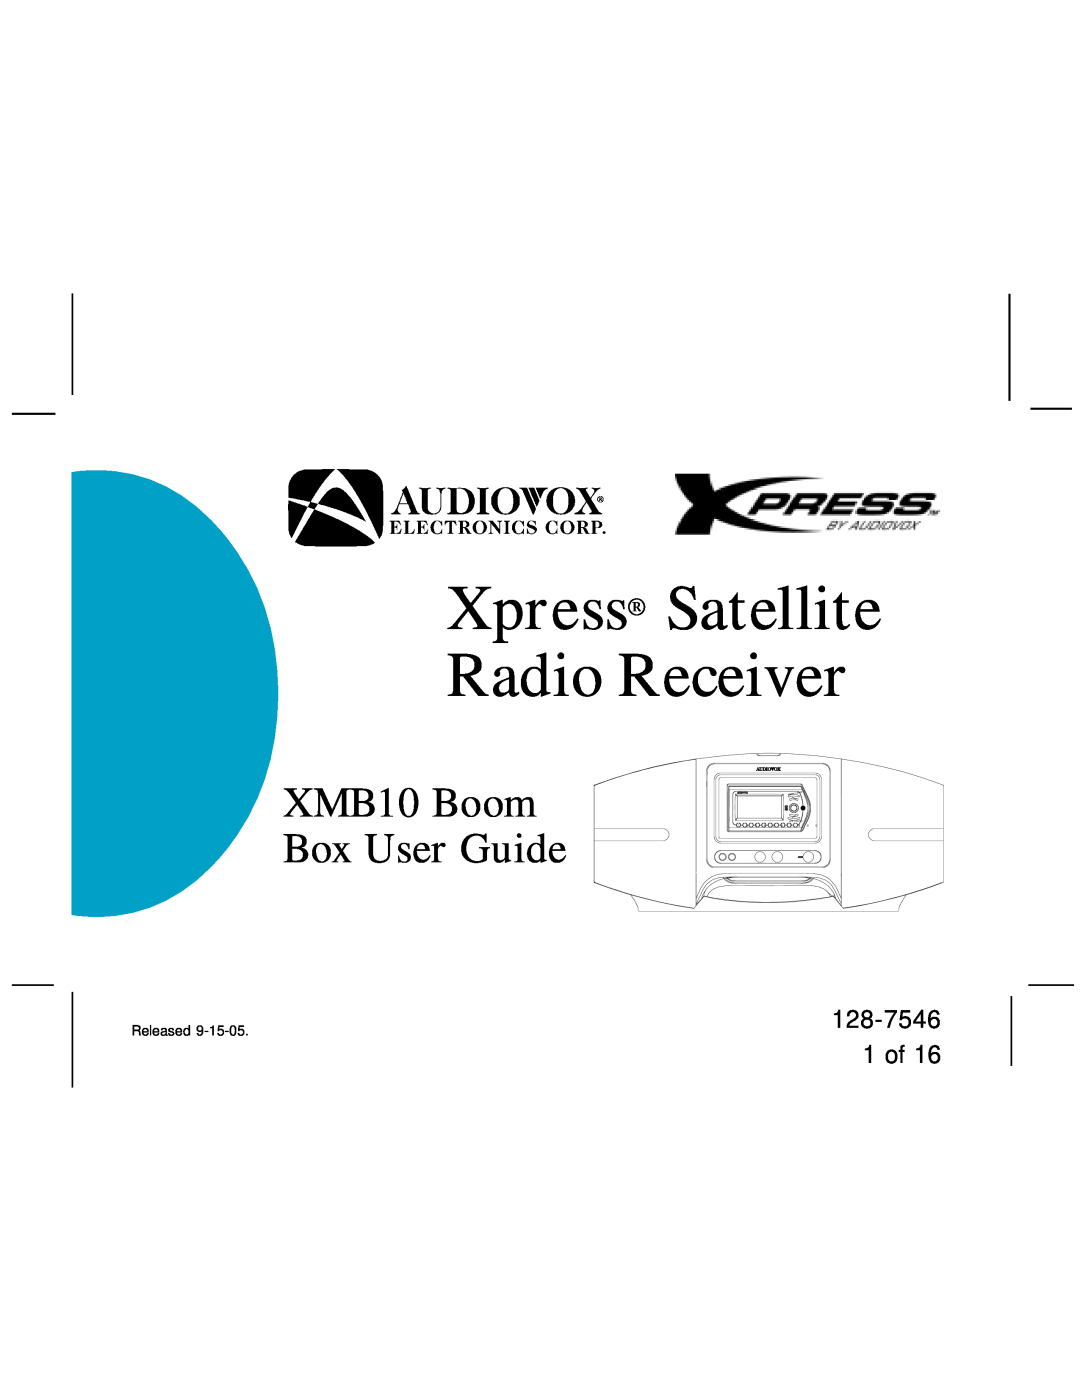 Audiovox manual 128-7546 1 of, Xpress Satellite Radio Receiver, XMB10 Boom Box User Guide 